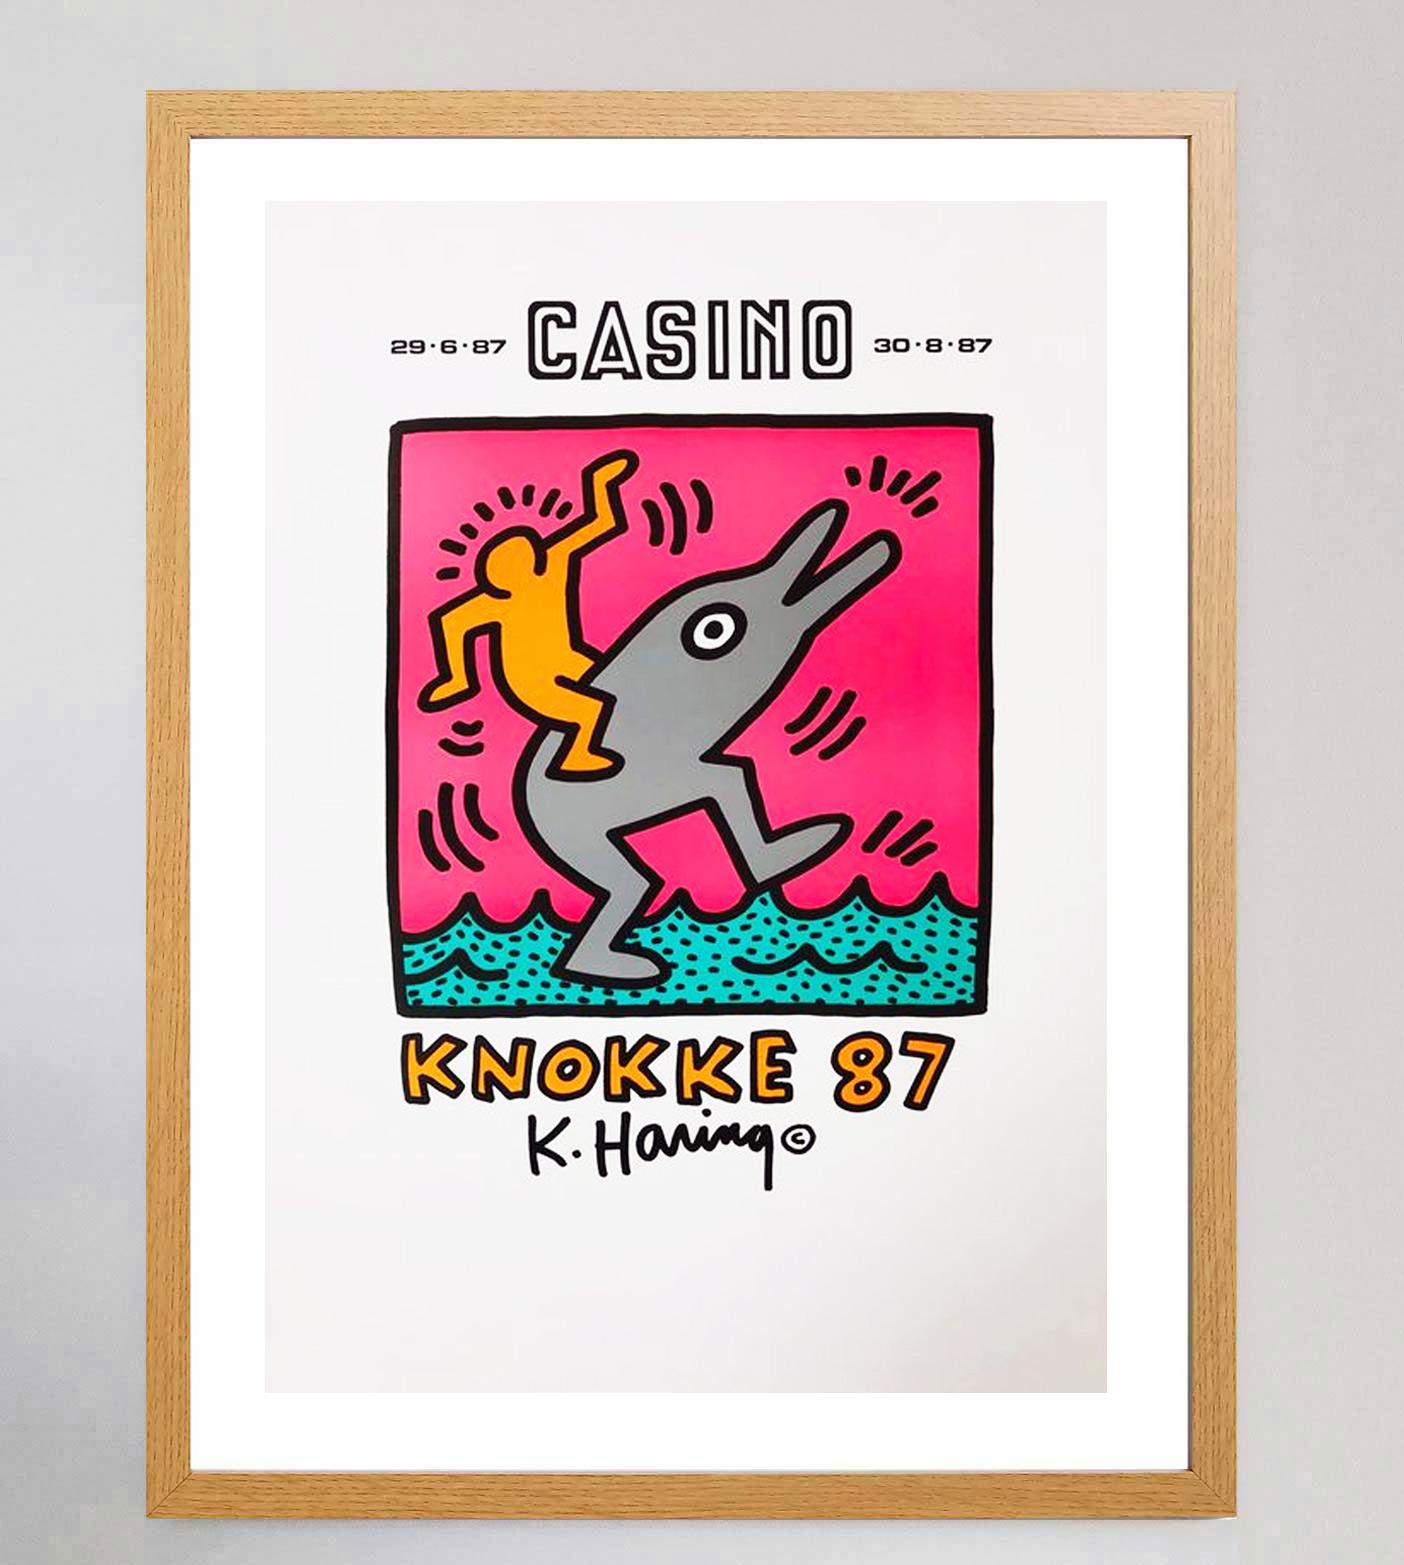 American 1987 Keith Haring, Casino Knokke Original Vintage Poster For Sale